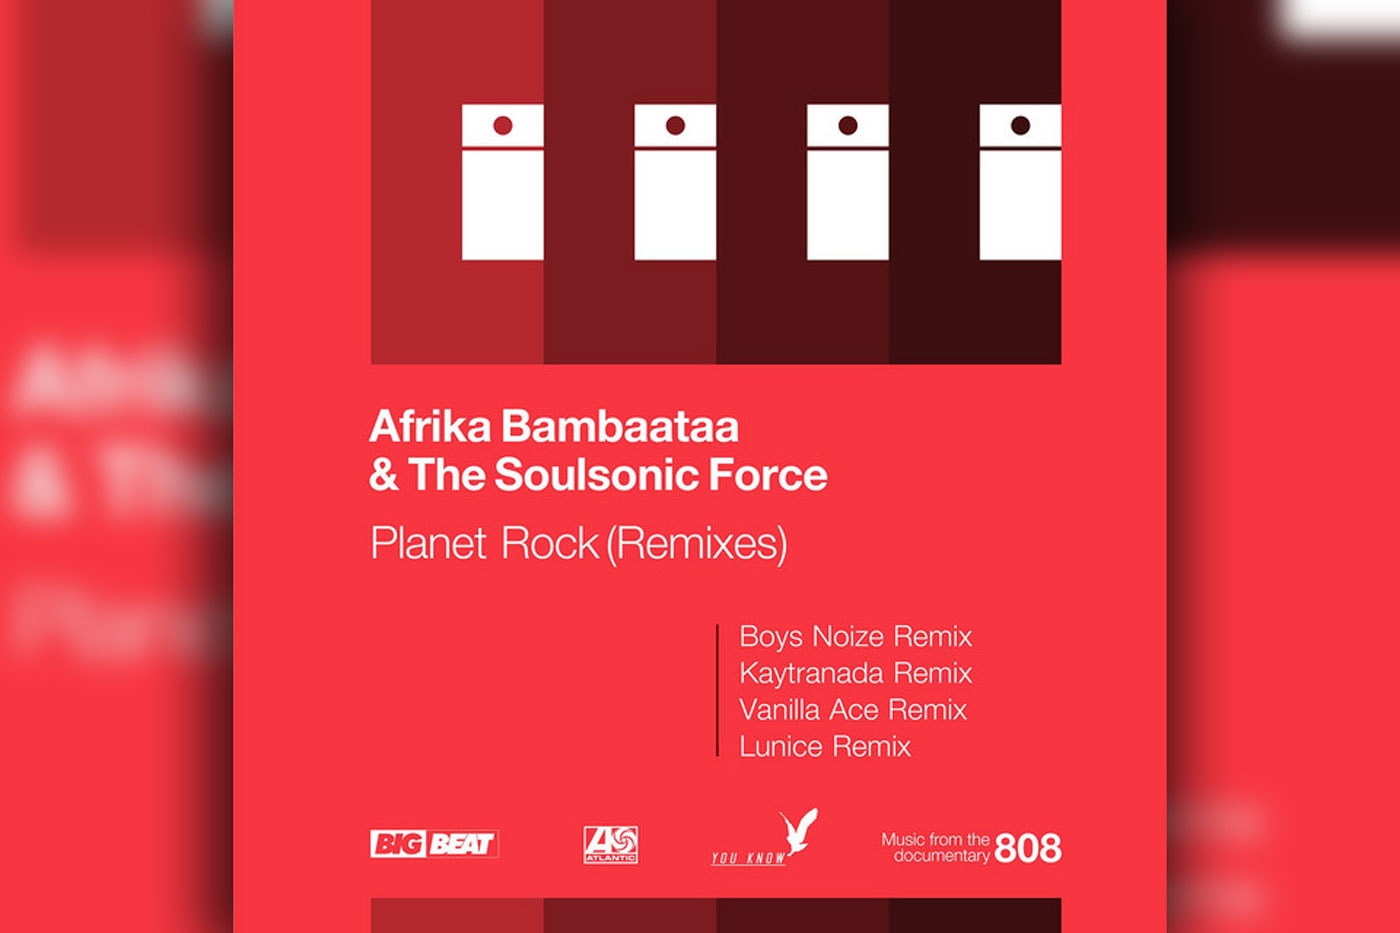 Kaytranada Remixes Afrika Bambaataa’s “Planet Rock” 808 documentary